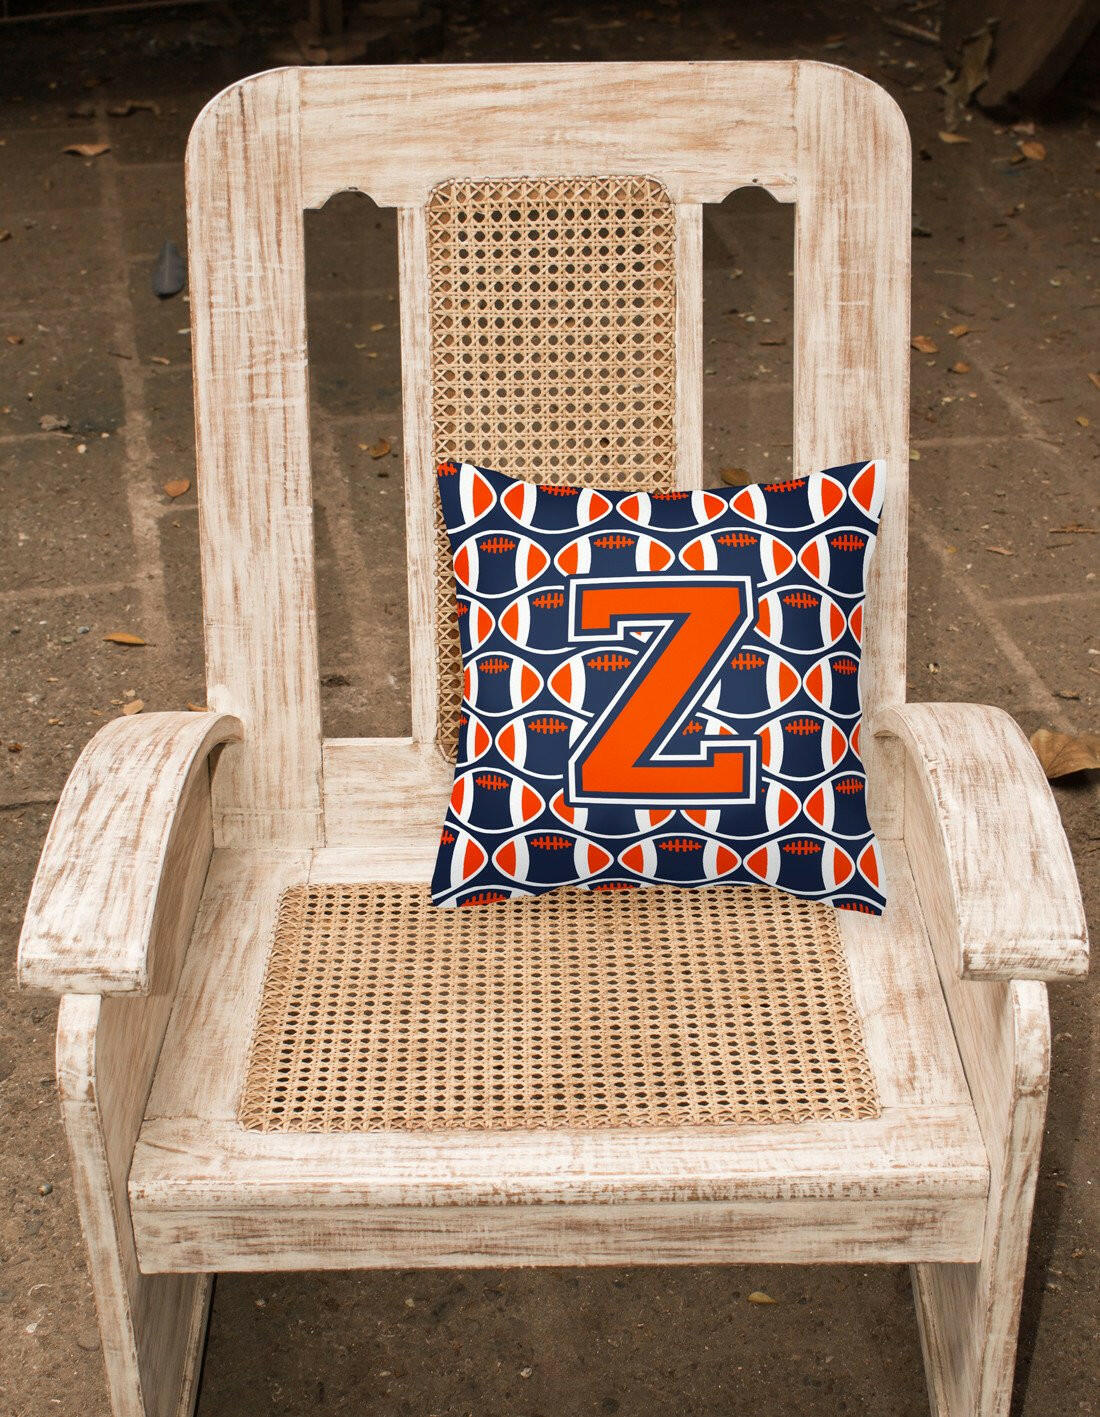 Letter Z Football Orange, Blue and white Fabric Decorative Pillow CJ1066-ZPW1414 by Caroline's Treasures